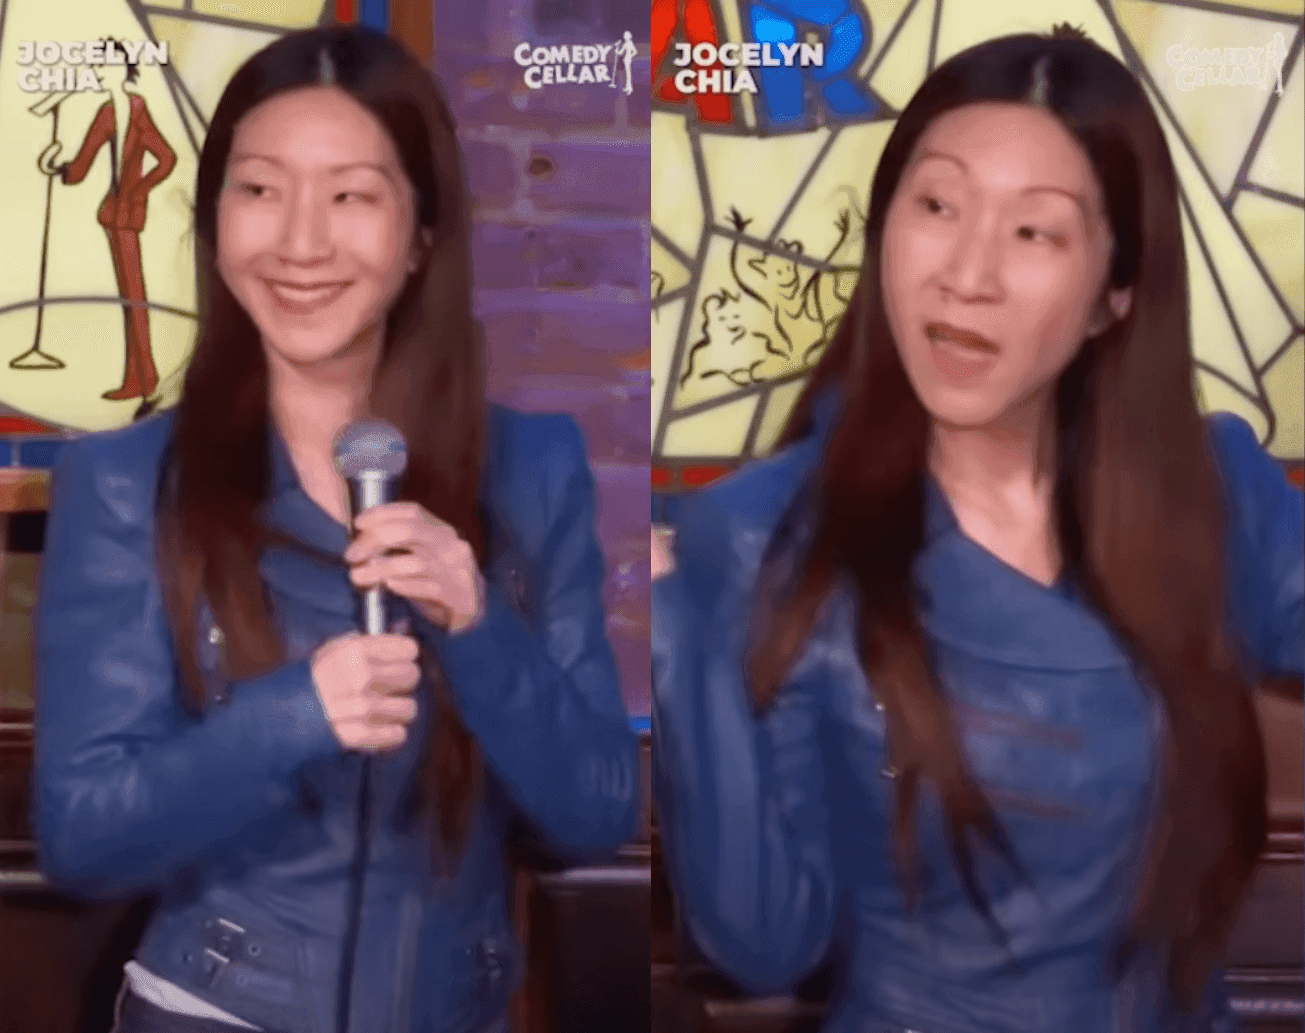 Stand-up comedian Jocelyn Chia.
